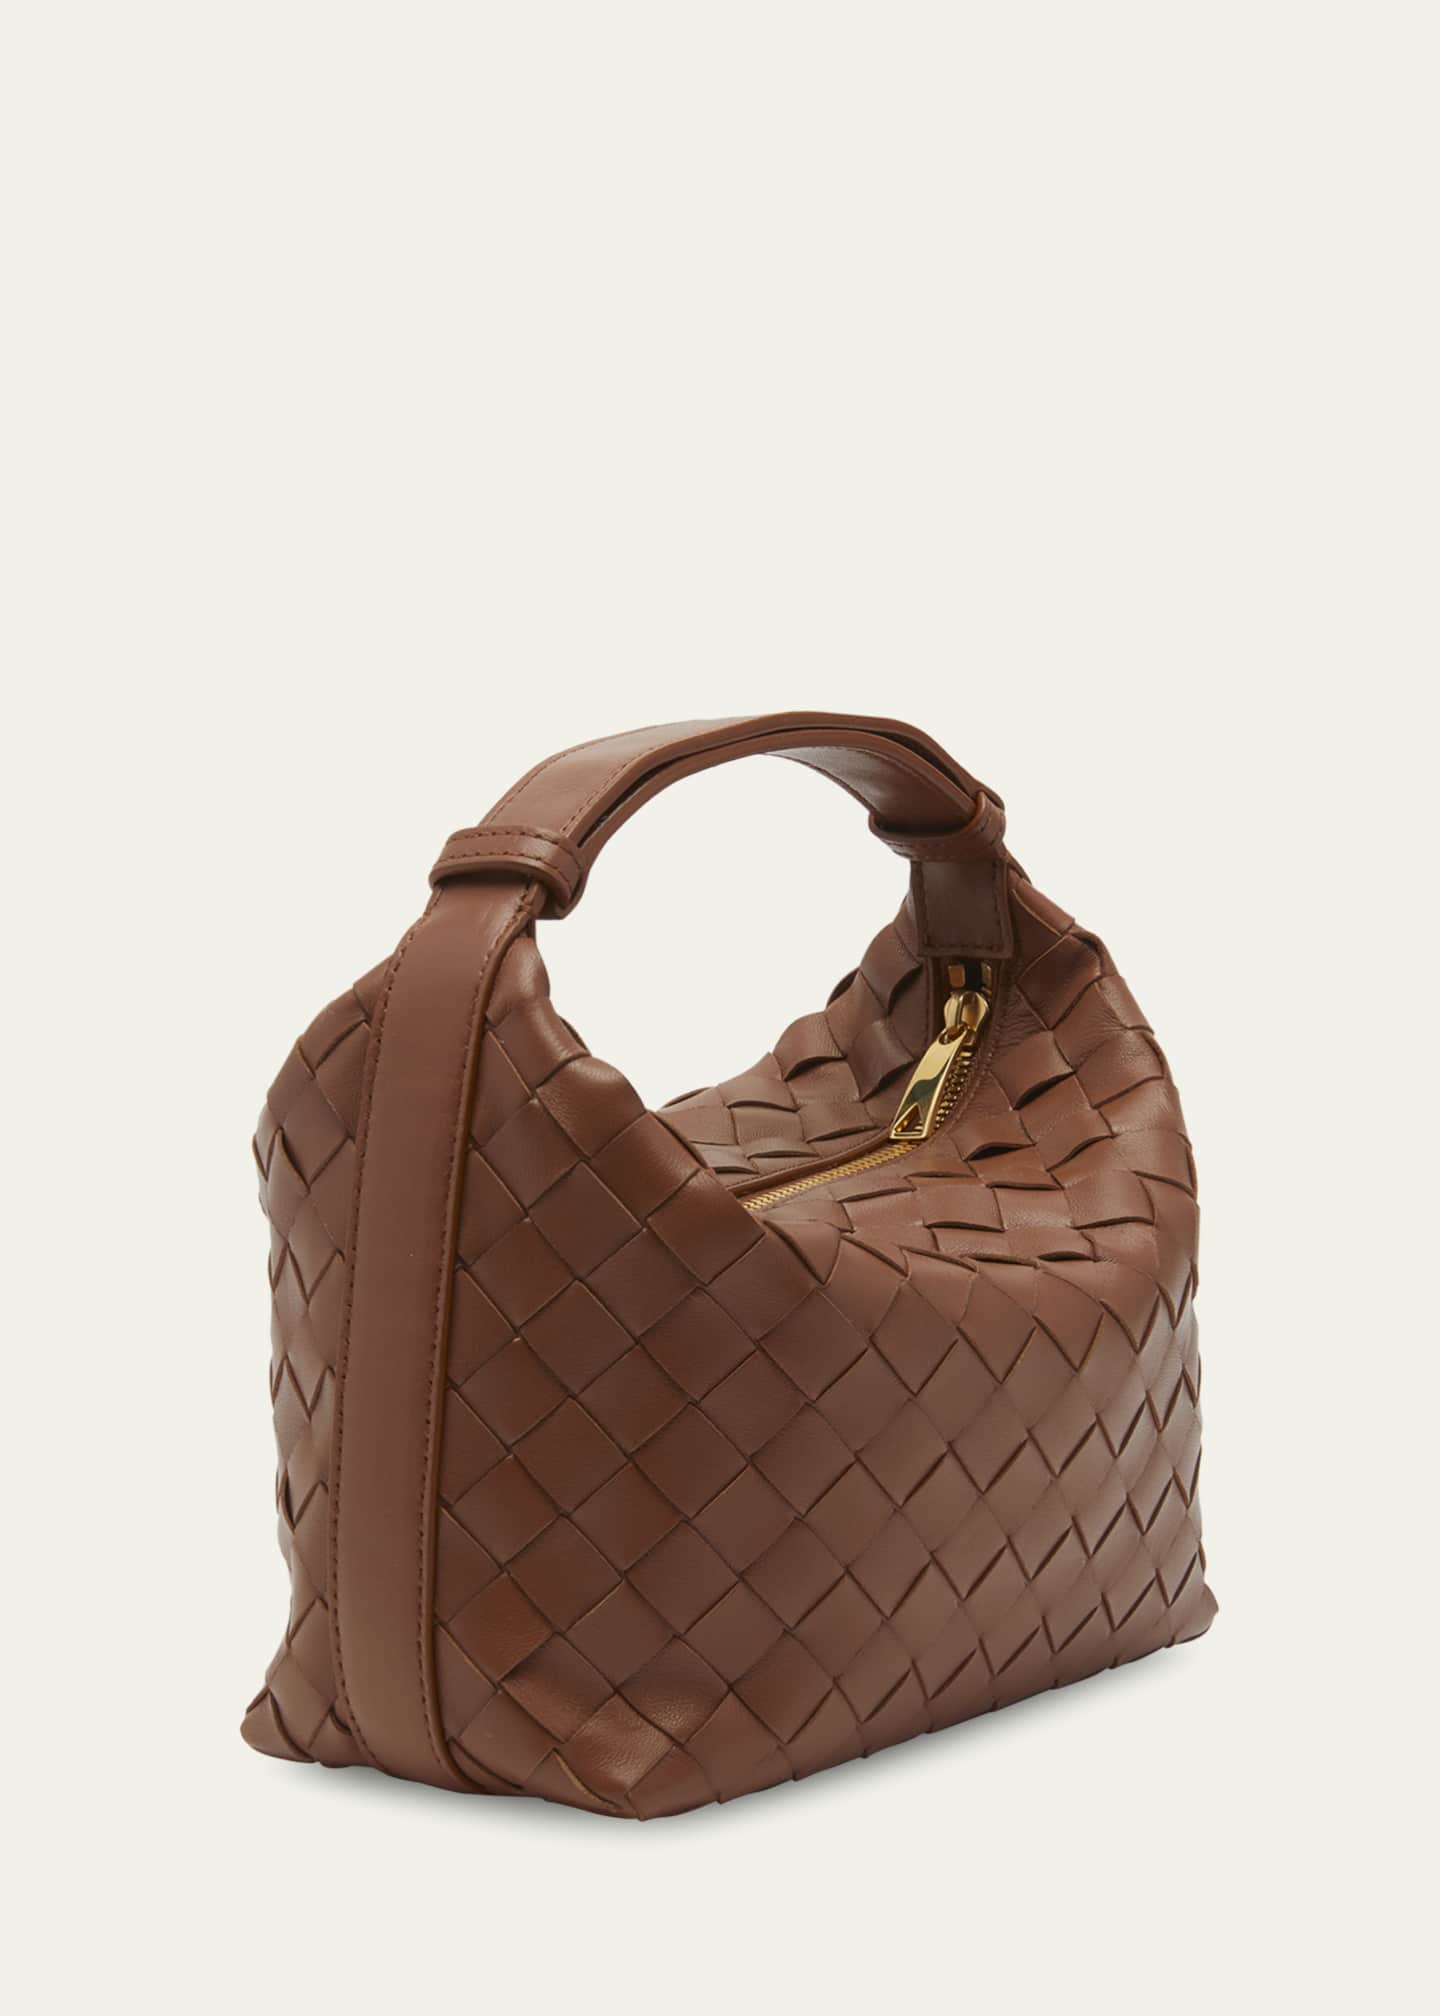 Bottega Veneta Women's Mini Wallace Intrecciato Leather Shoulder Bag